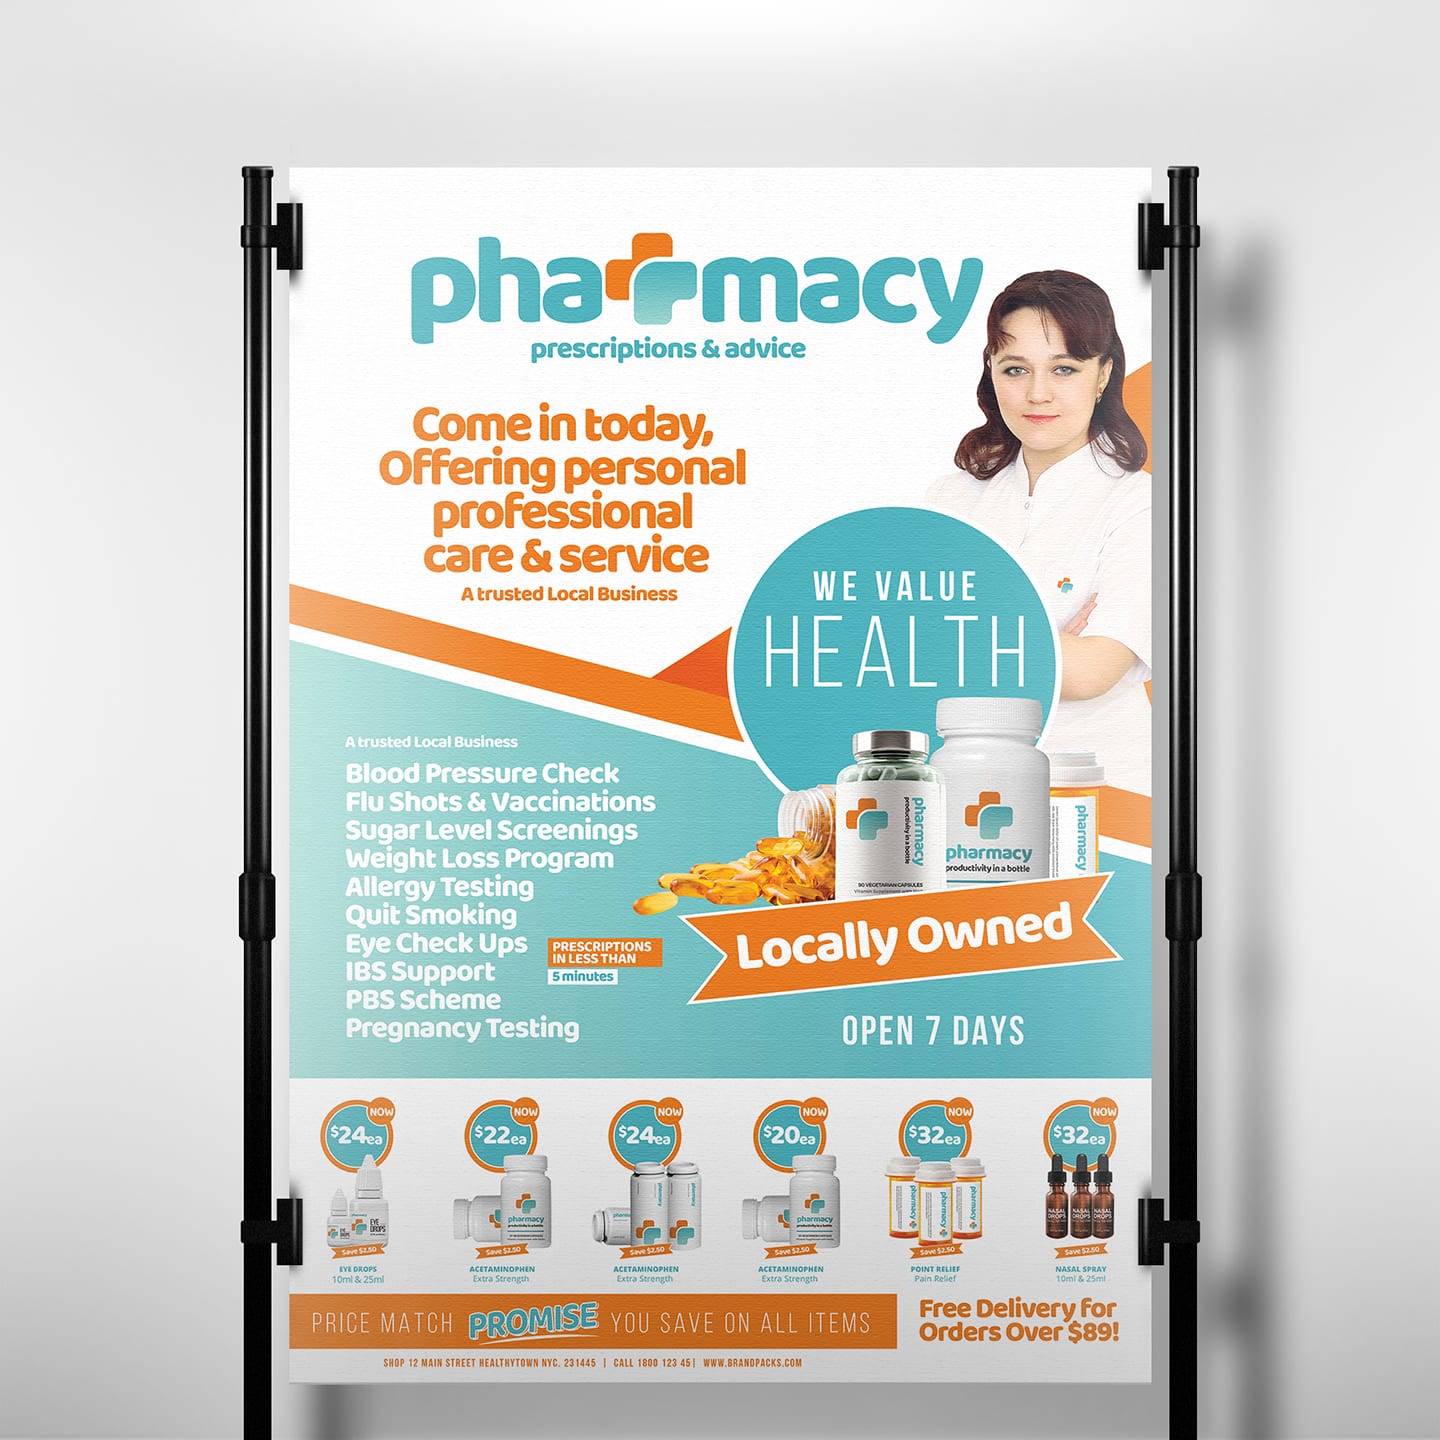 poster presentation ideas for pharmacy